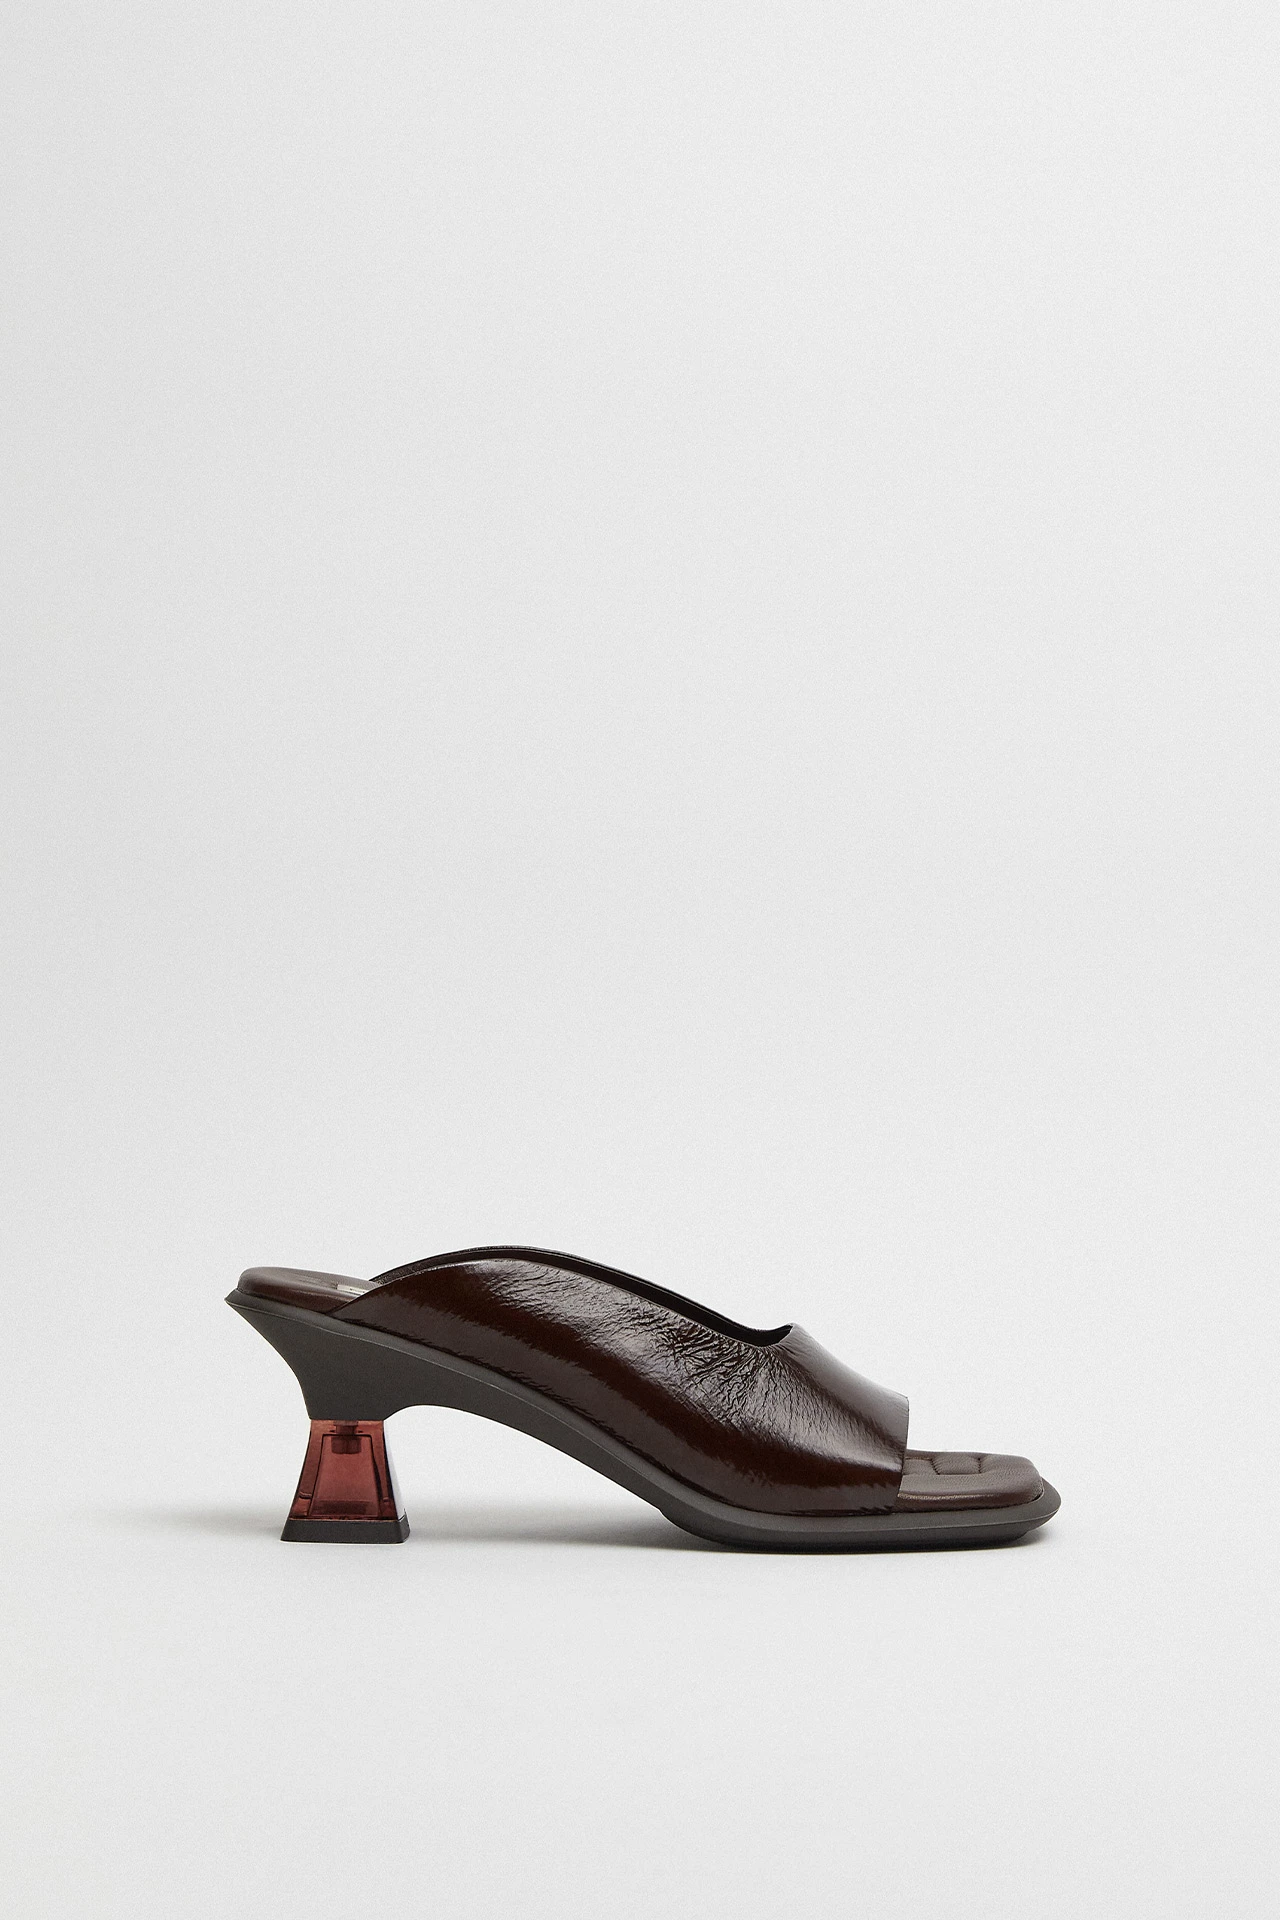 Miista-janaina-dark-brown-mule-sandals-01